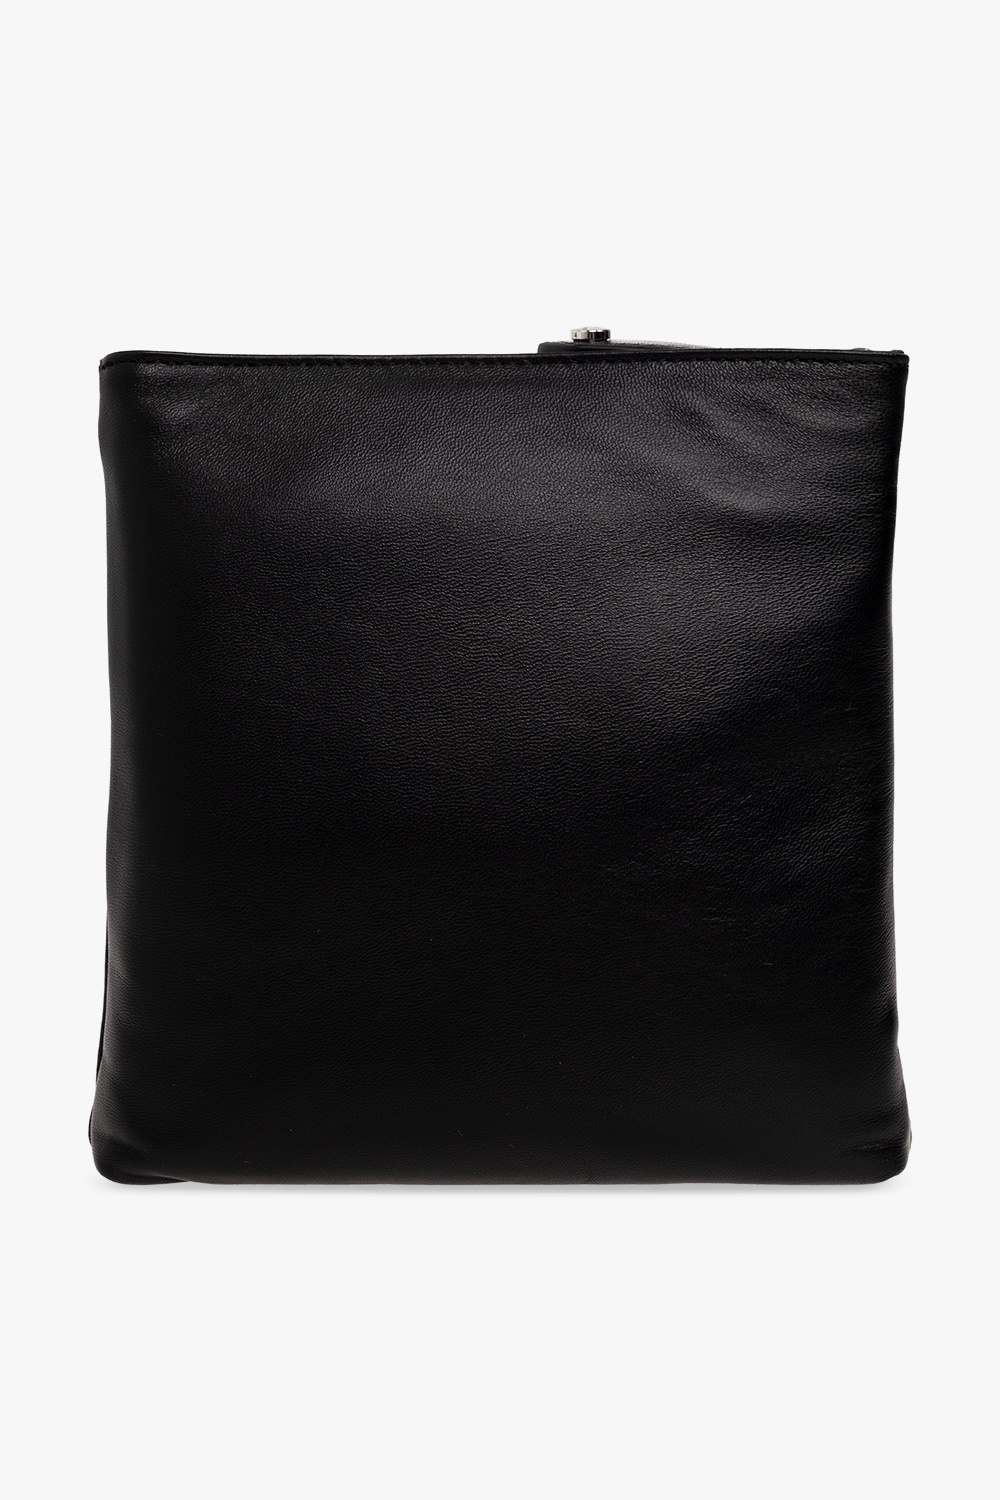 Vivienne Westwood ‘Squire New Square’ shoulder Ver bag